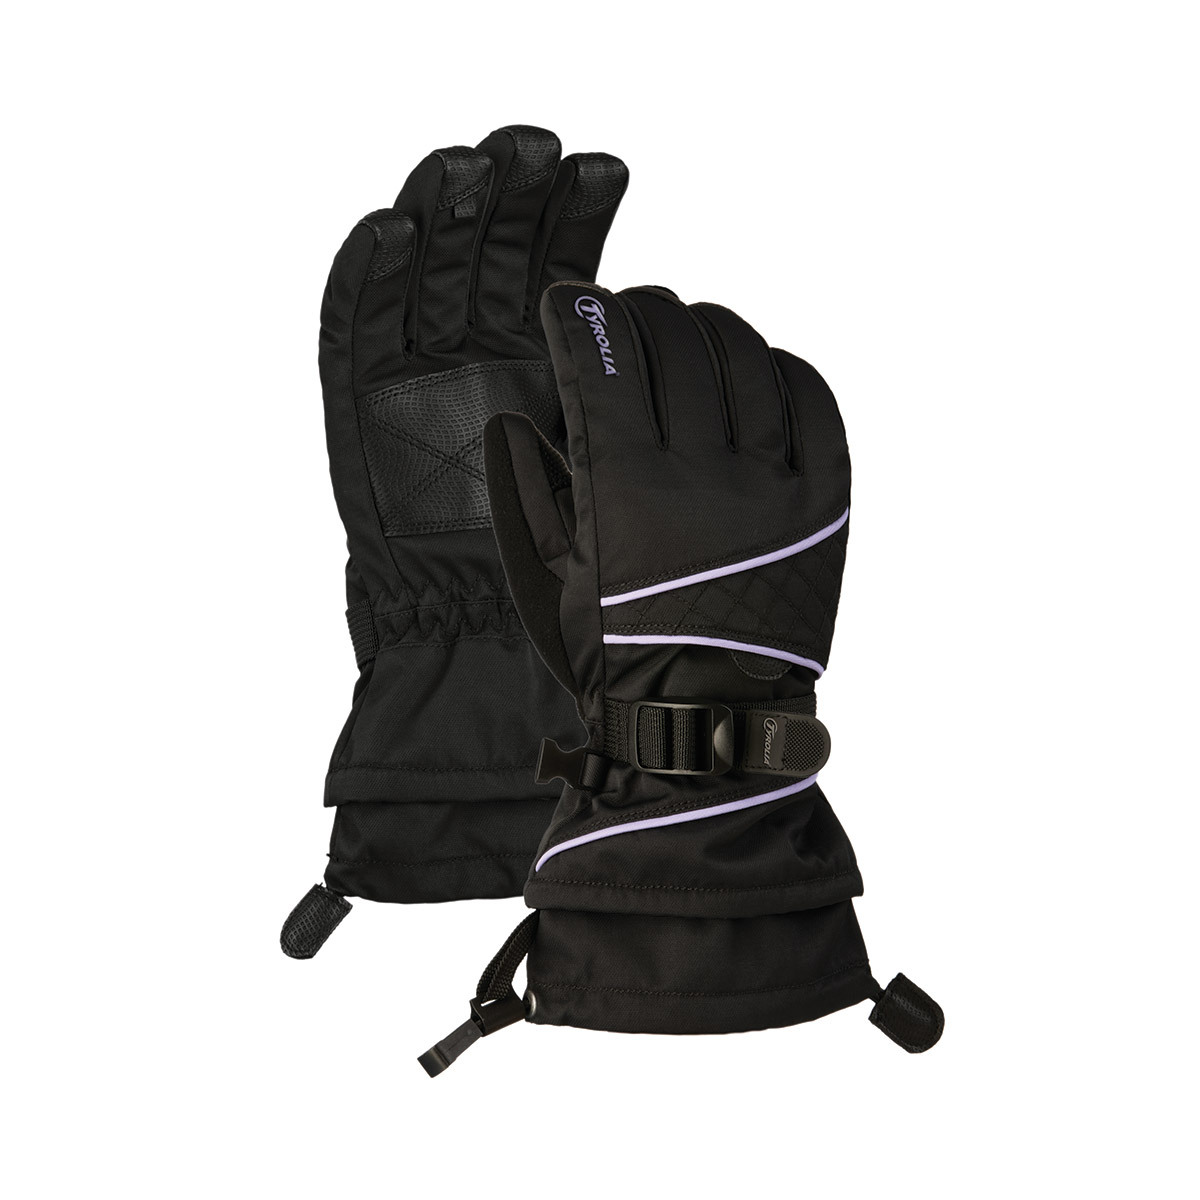 Tyrolia Junior Ski/Snowboard Gloves - Black Pink, L